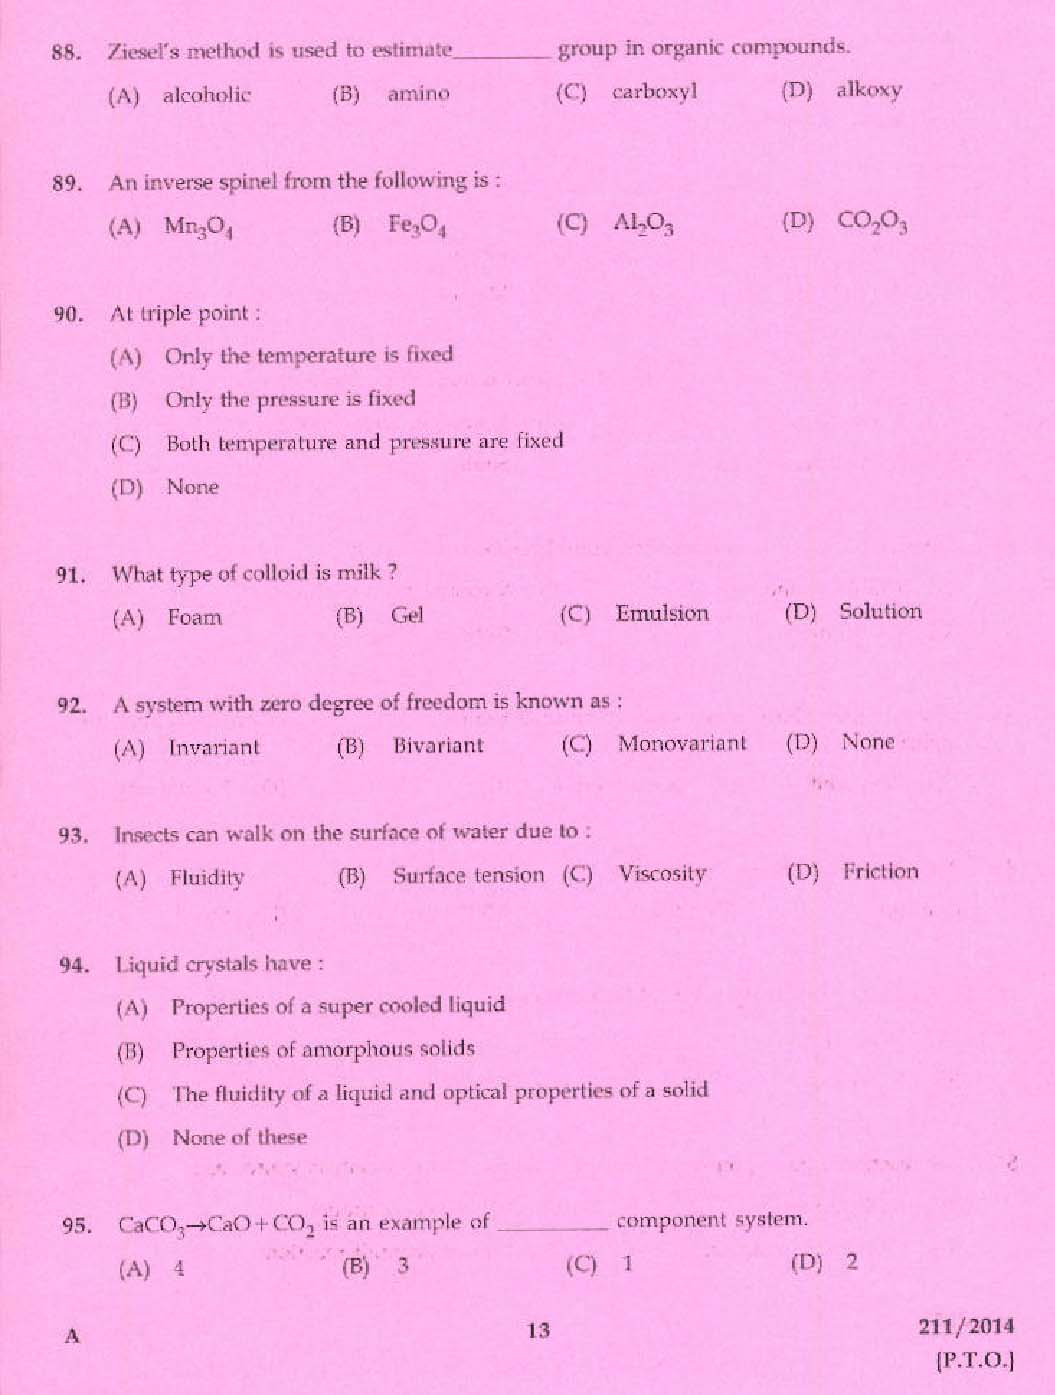 KPSC Assistant Chemist Exam 2014 Code 2112014 11